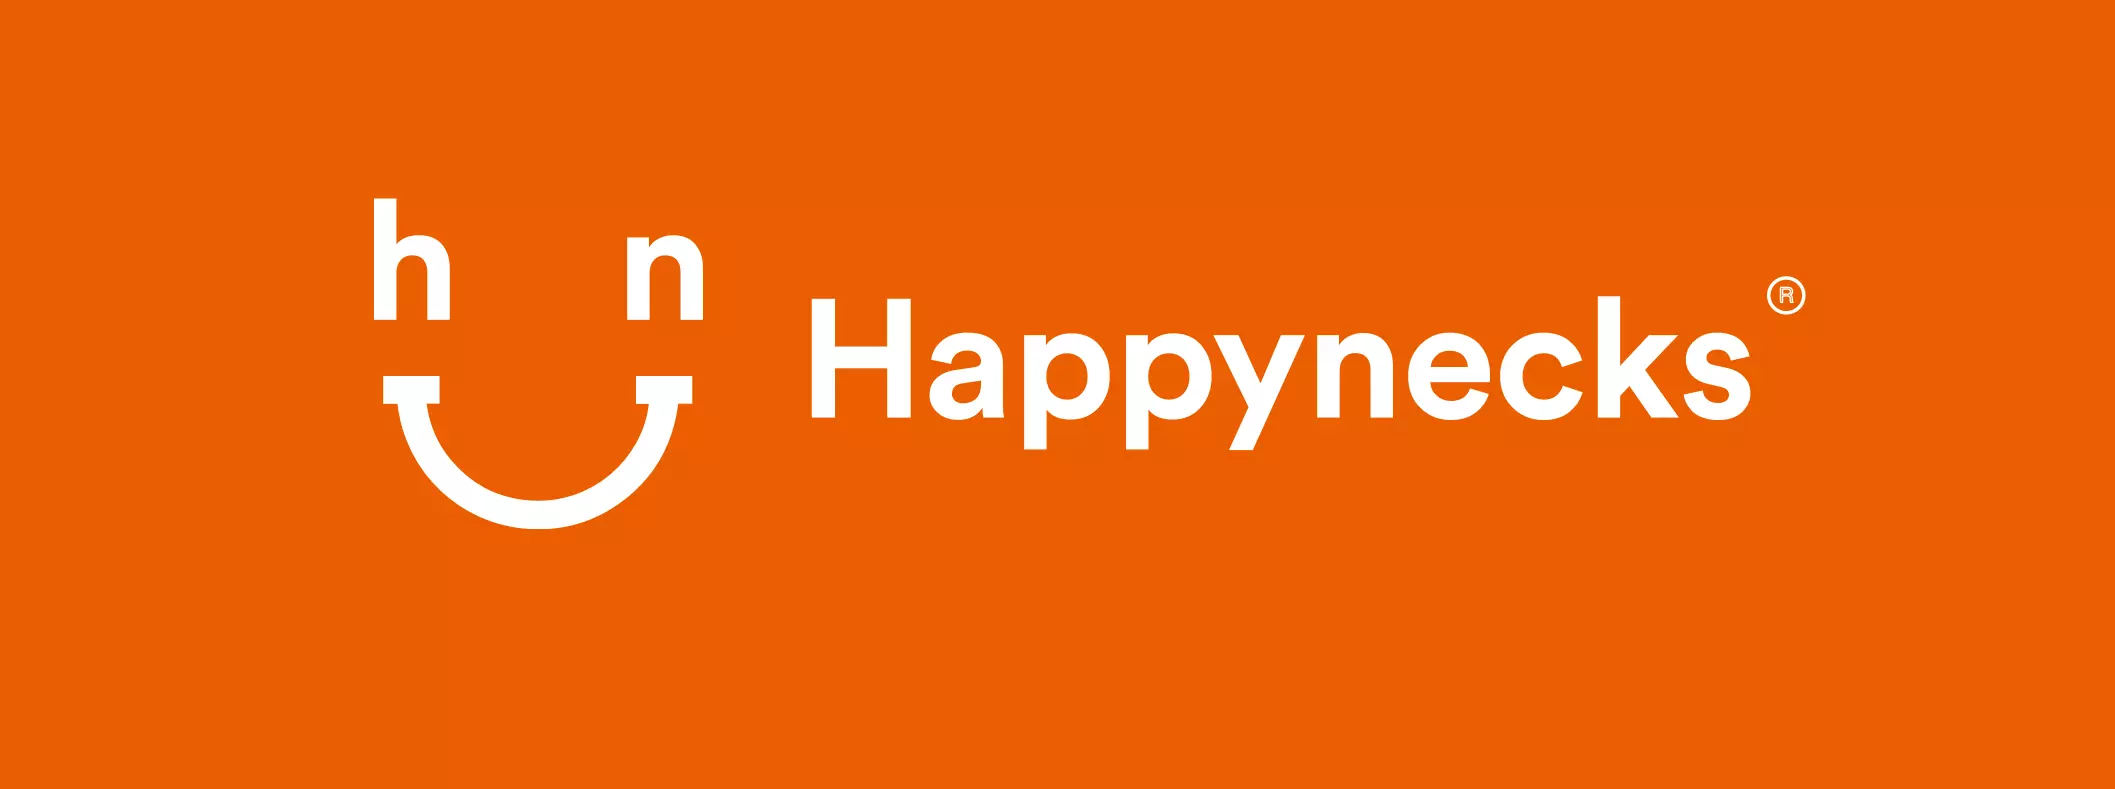 Happynecks logo.png